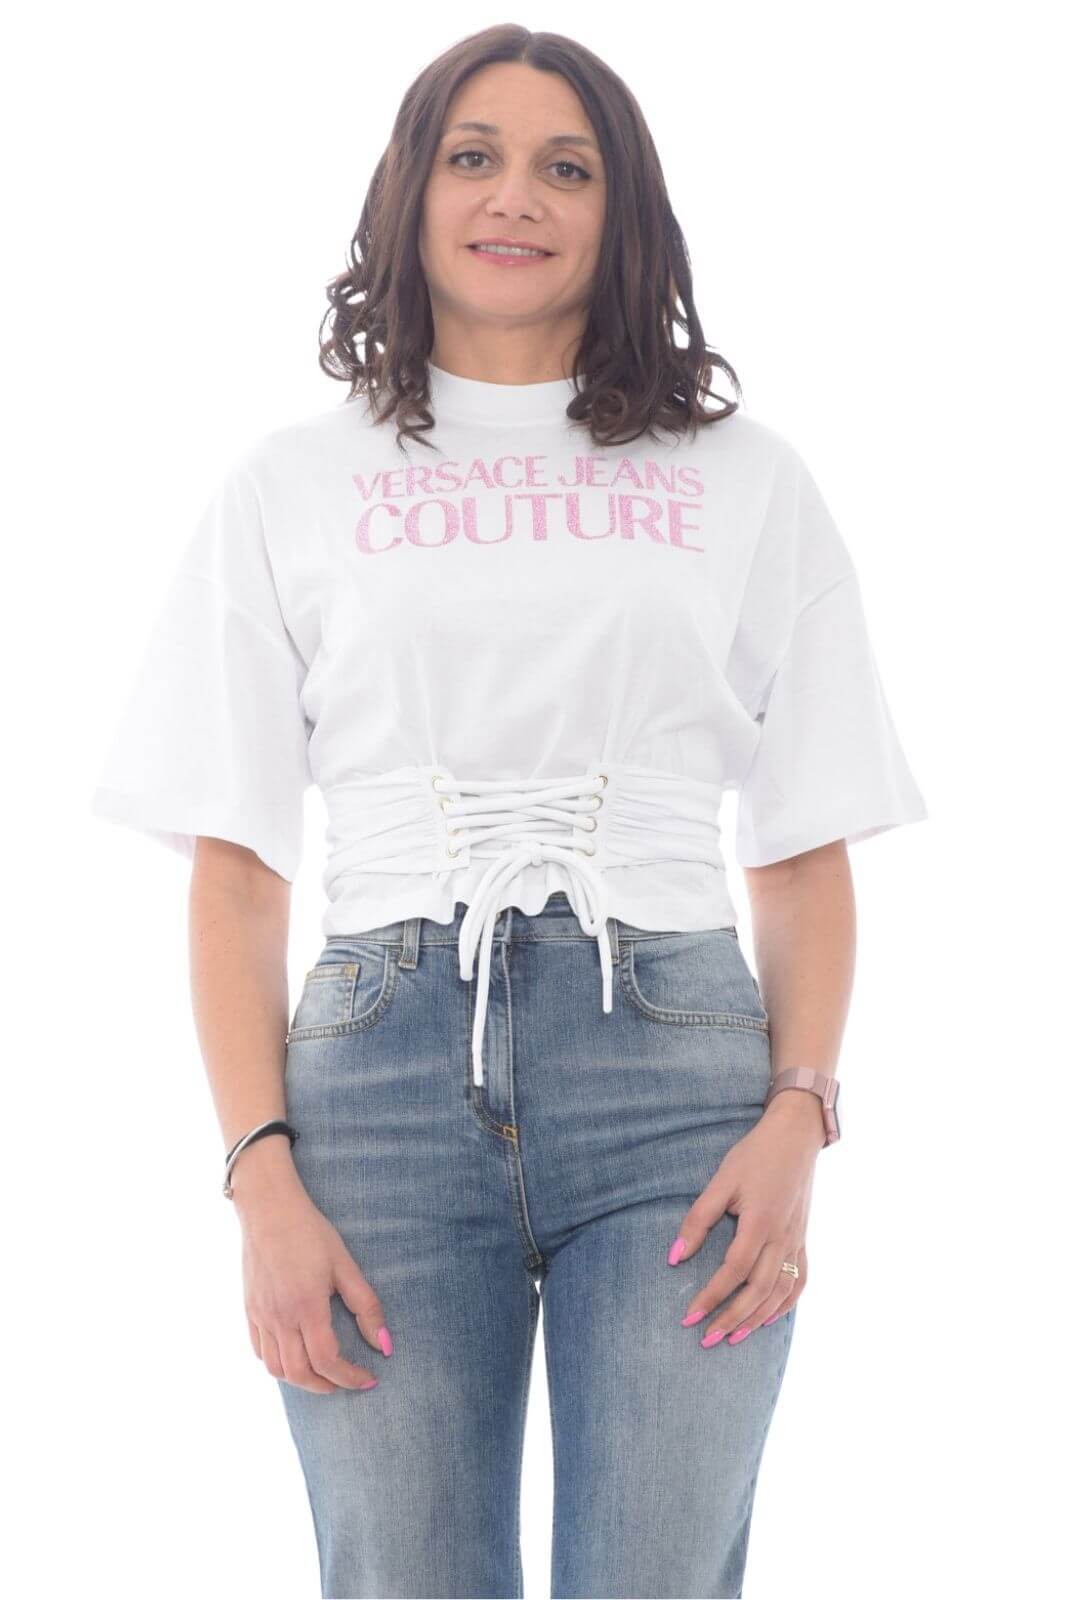 Versace Jeans Couture T Shirt donna con lacci